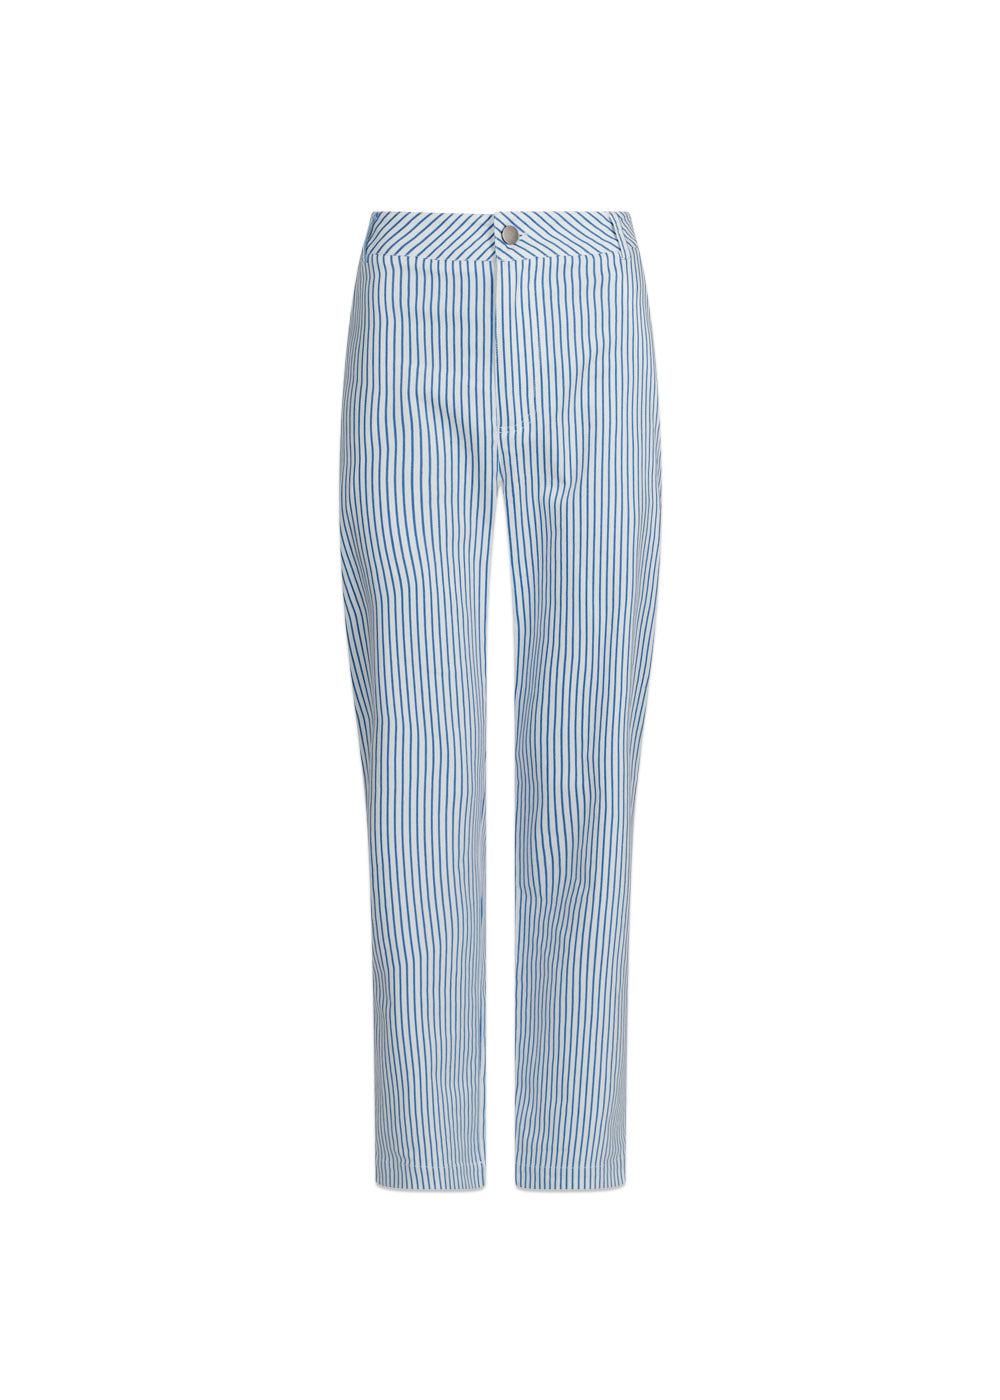 Neo Noirs Zuzan Big Stripe pants - Light Blue. Køb bukser her.